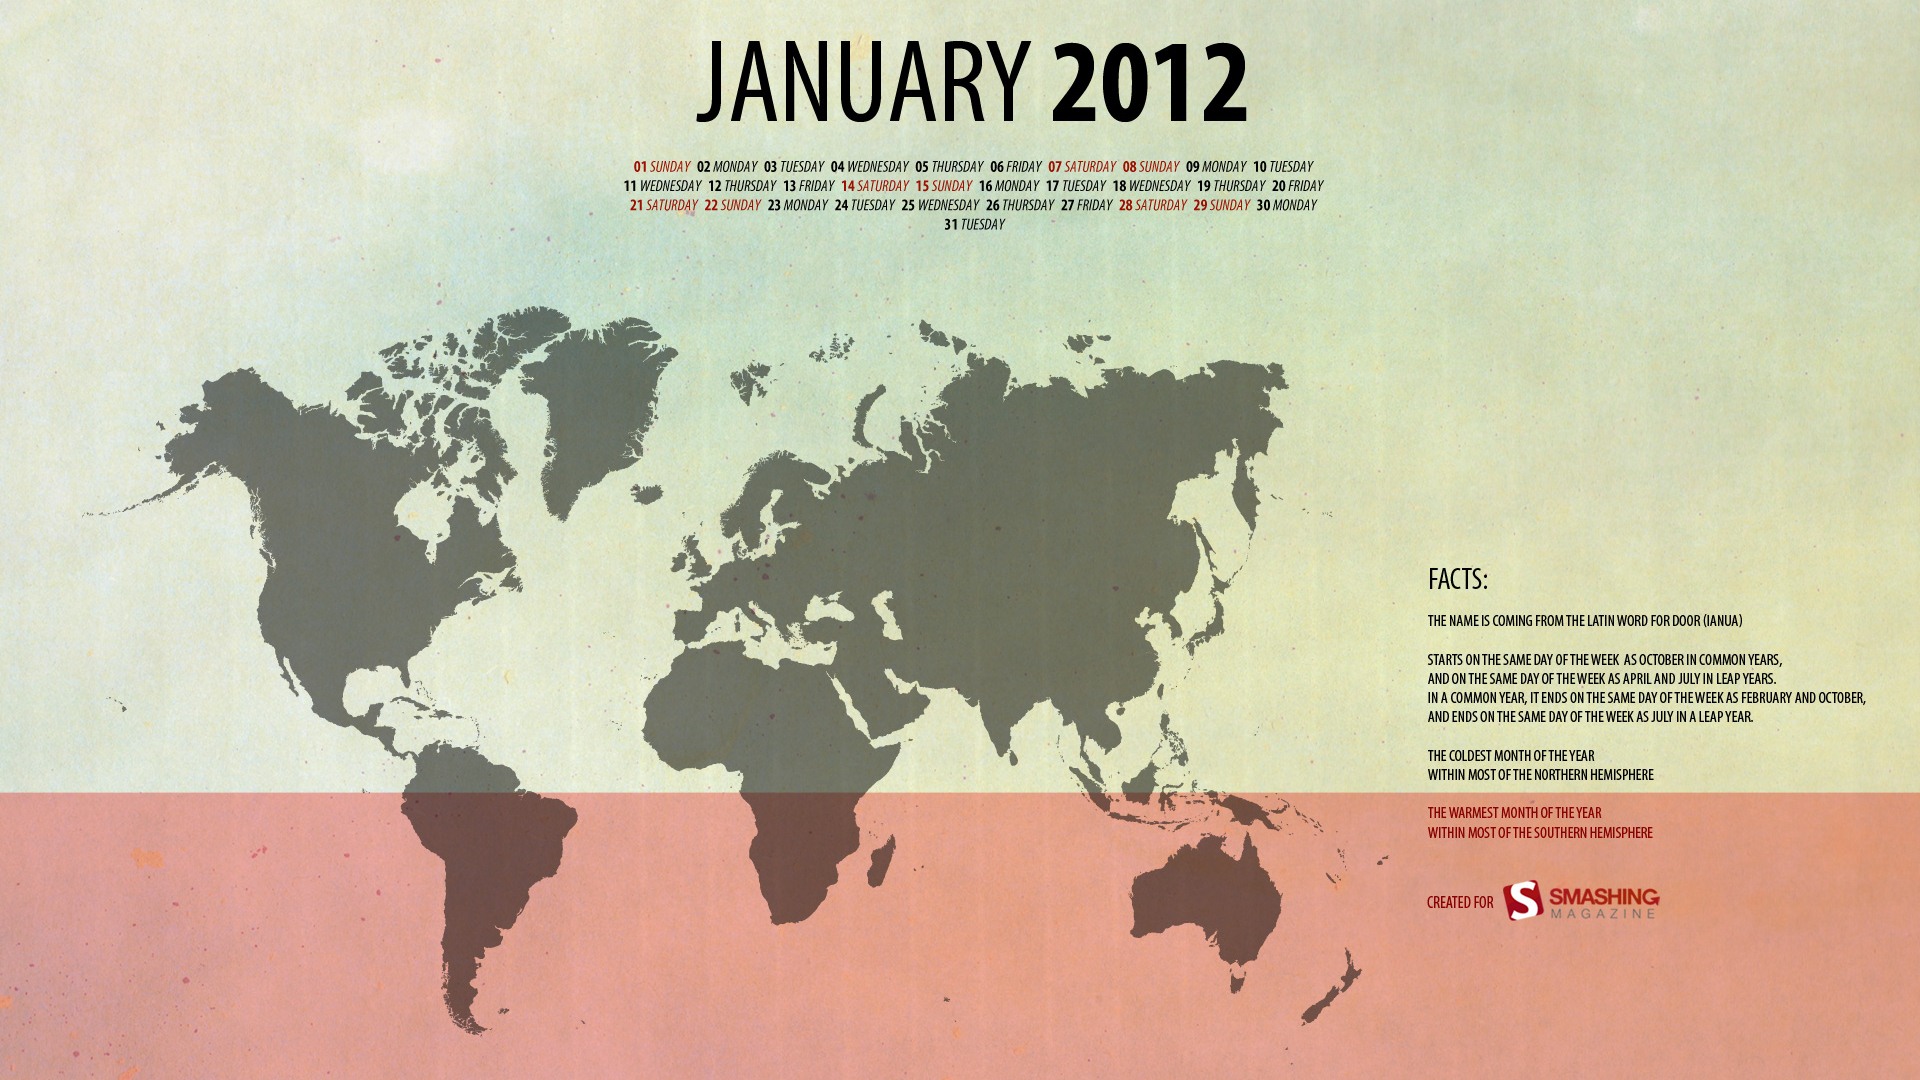 January 2012 Calendar Wallpapers #10 - 1920x1080